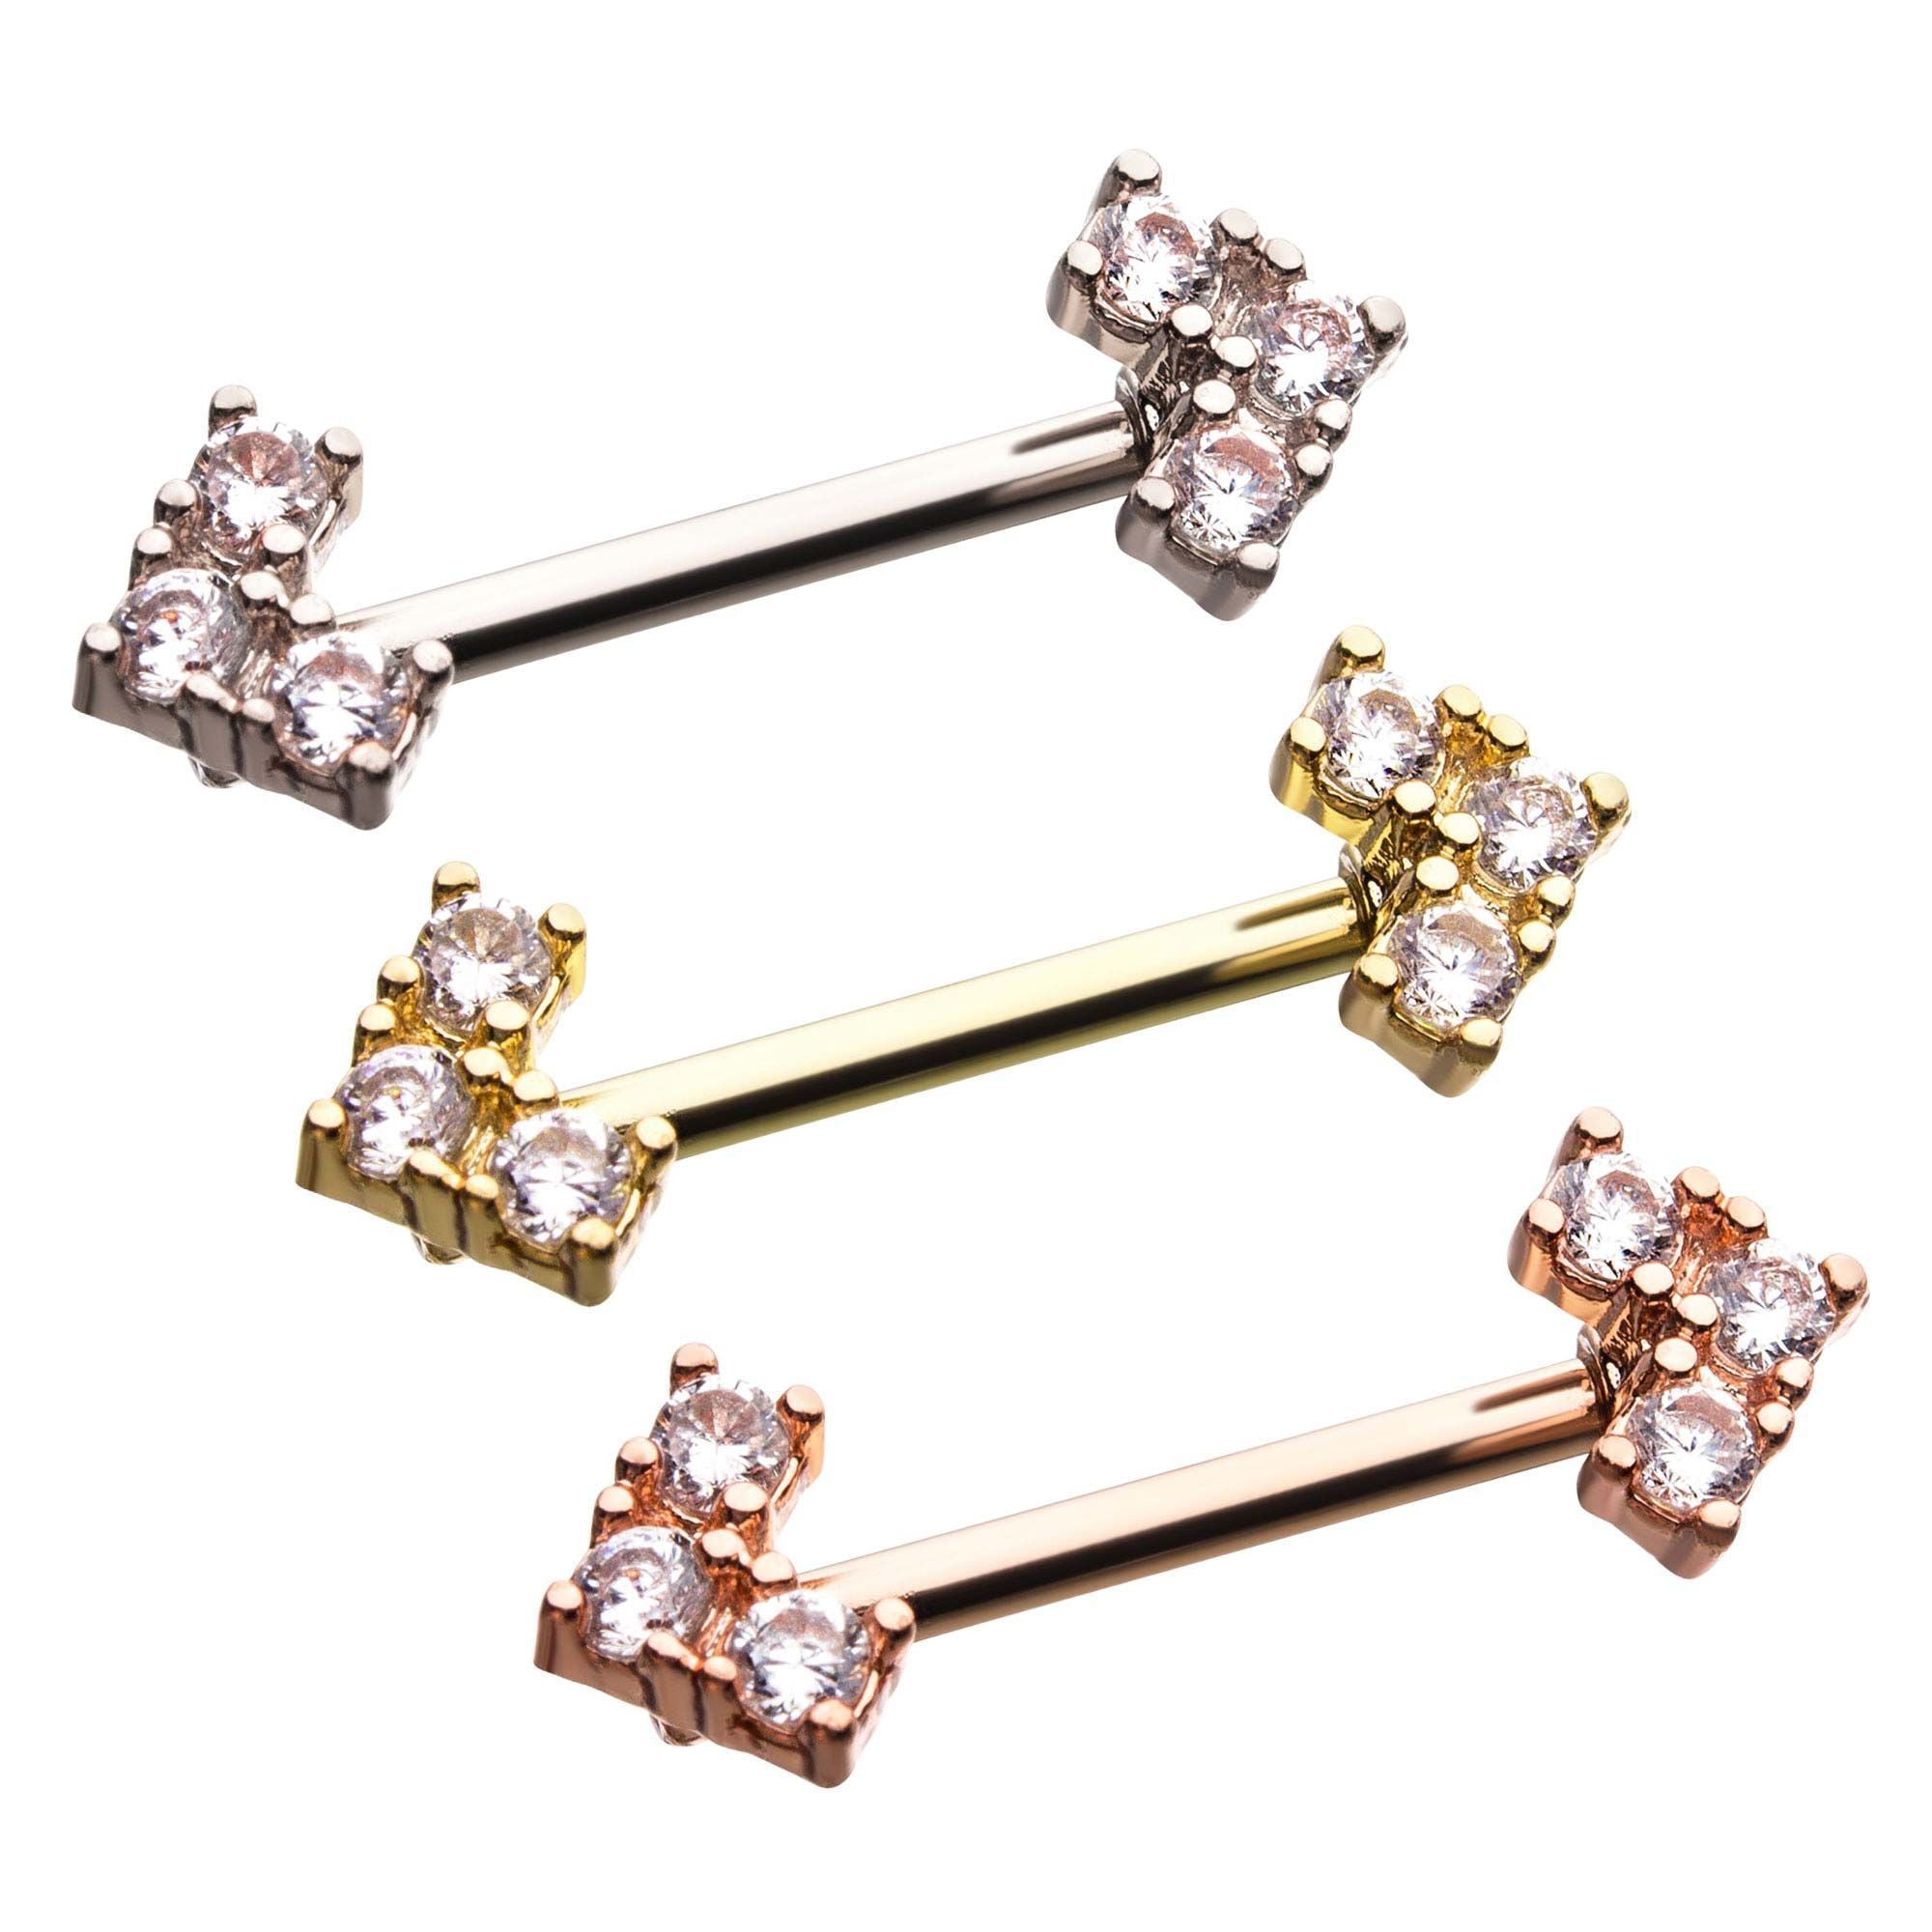 14g 9/16 Base Metal Arrow 3 Prong Set Clear CZ 2mm Gem Nipple Jewelry - 1 Pair sbvnp45717